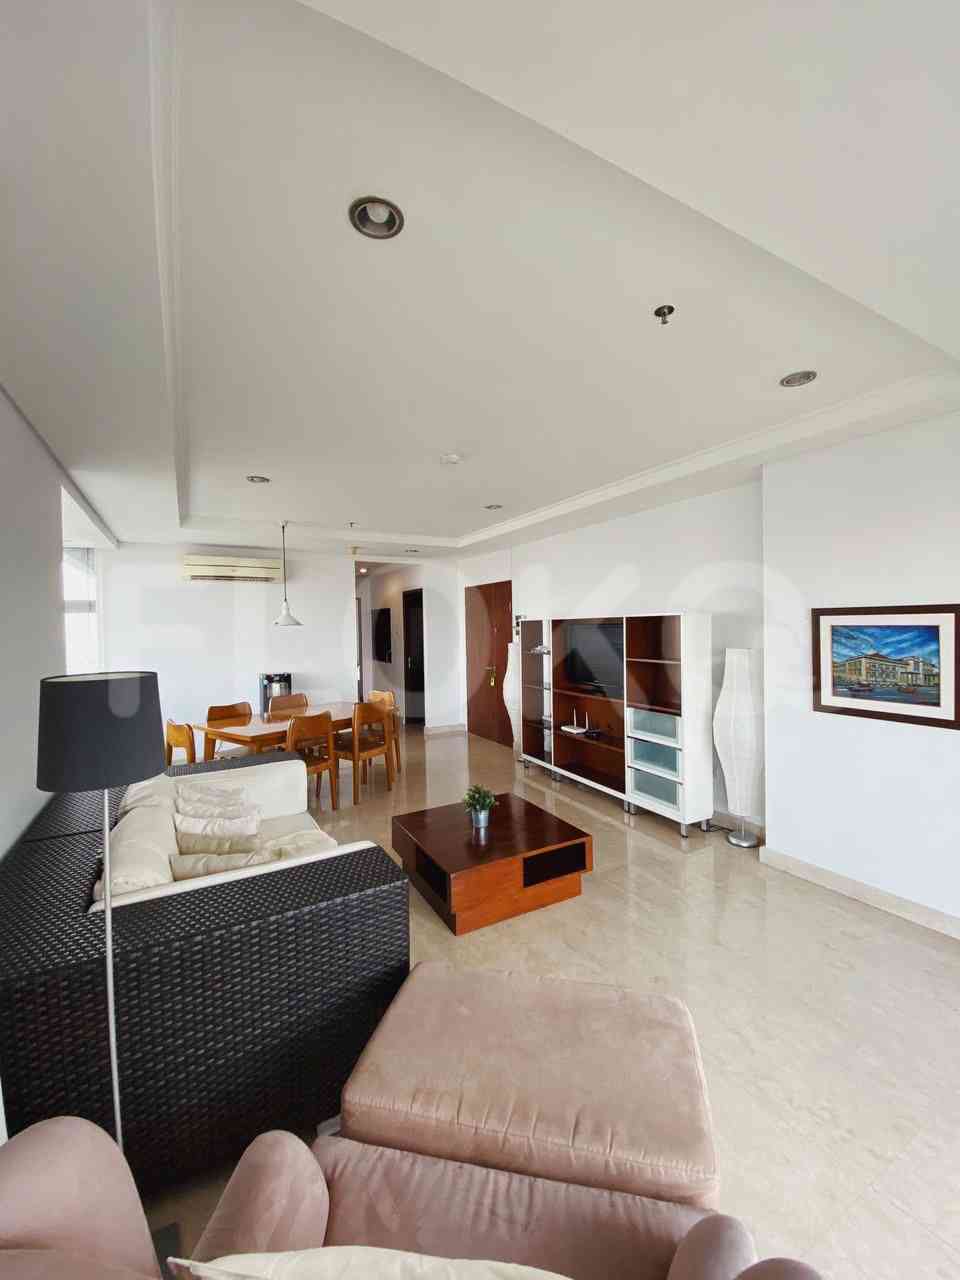 4 Bedroom on 26th Floor for Rent in Permata Hijau Suites Apartment - fpef10 1